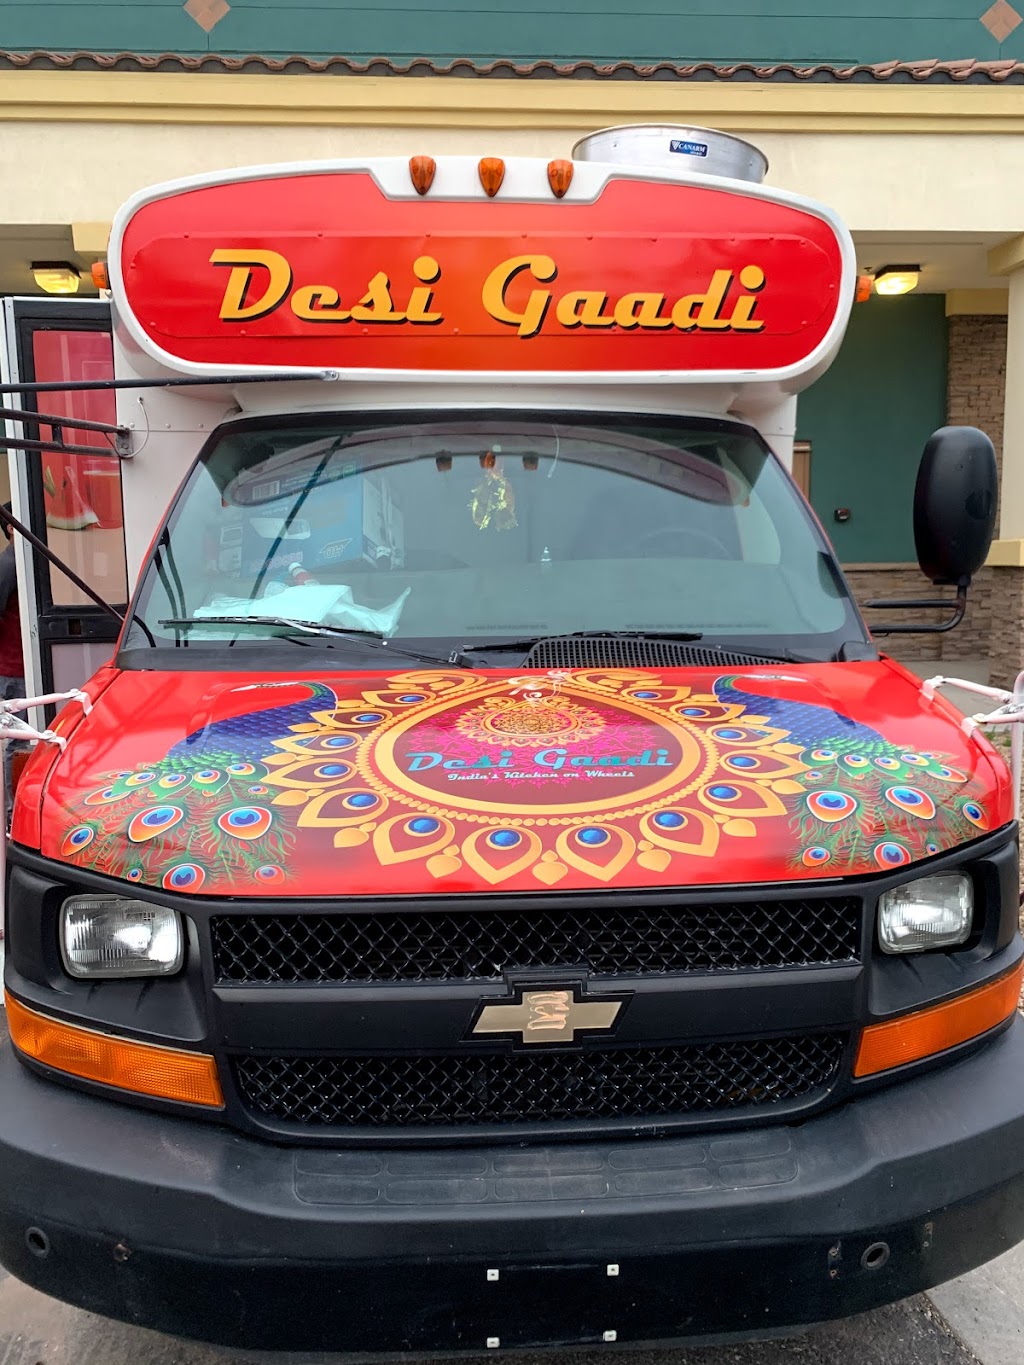 Desigaadi Food Truck | 1209 E Bell Rd, Phoenix, AZ 85022 | Phone: (602) 575-3939